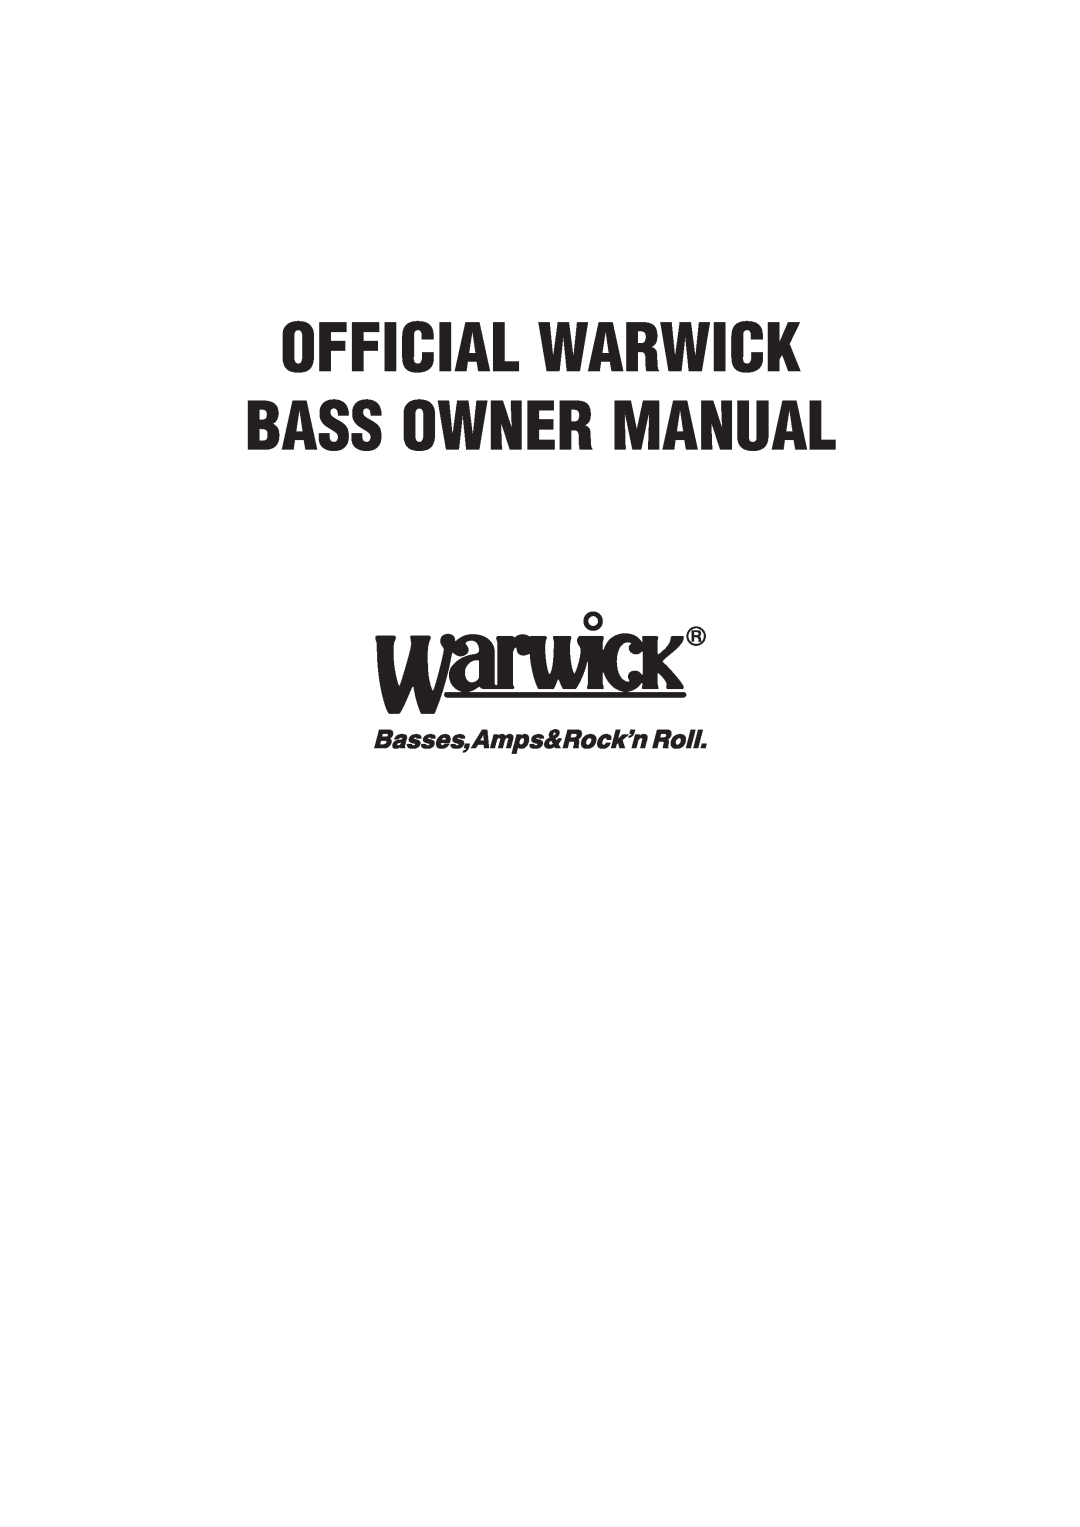 Warwick Bass owner manual 